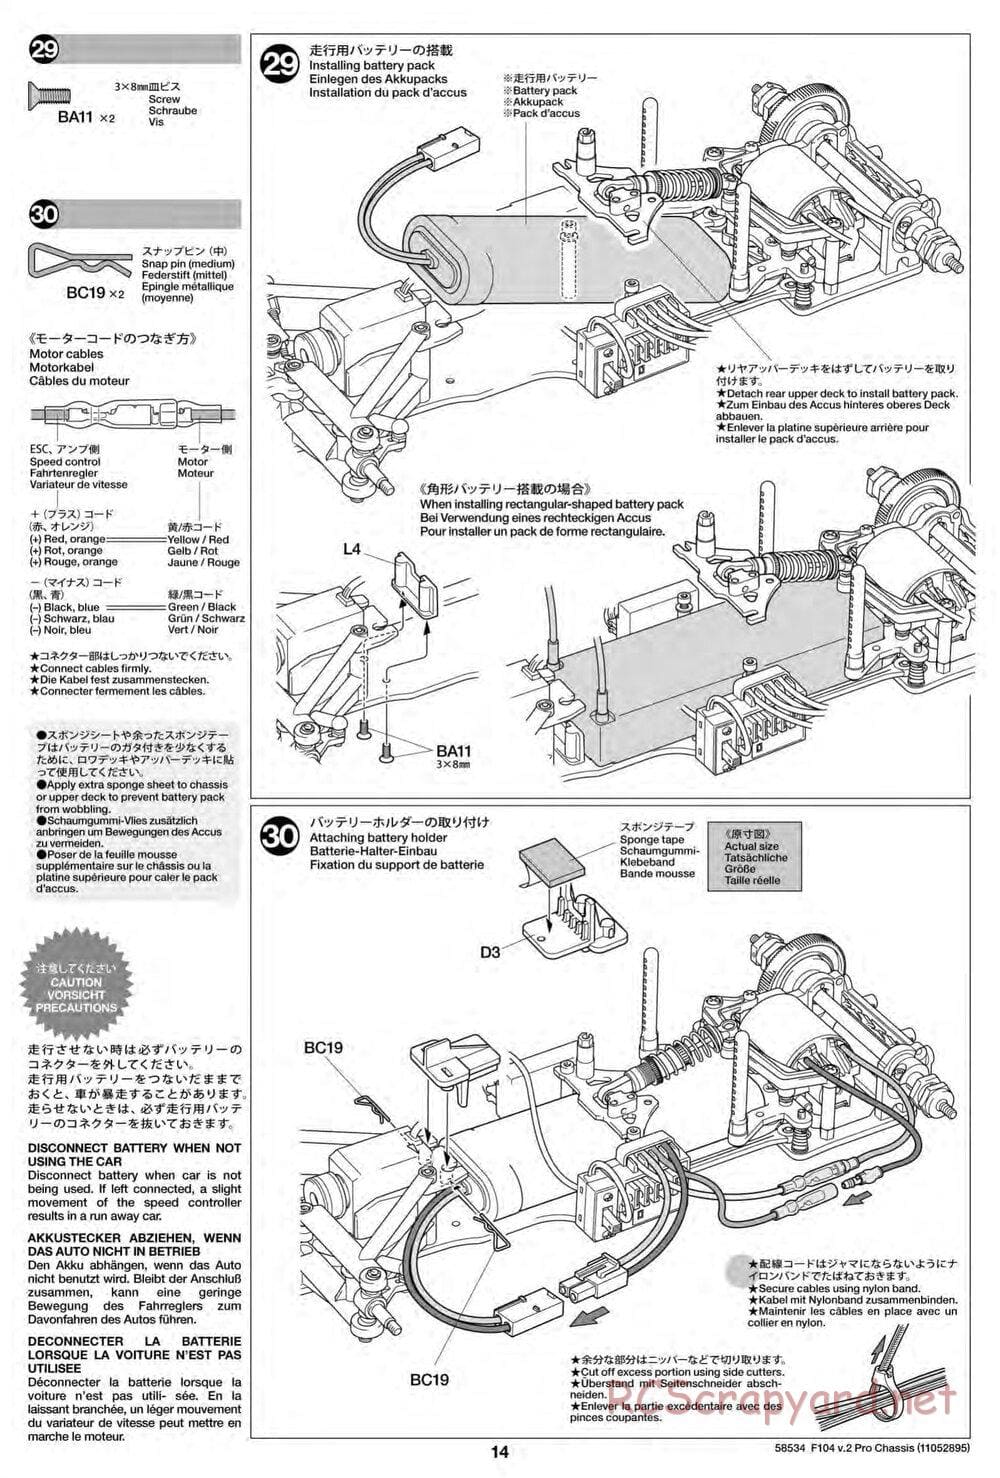 Tamiya - F104 Ver.II PRO Chassis - Manual - Page 14